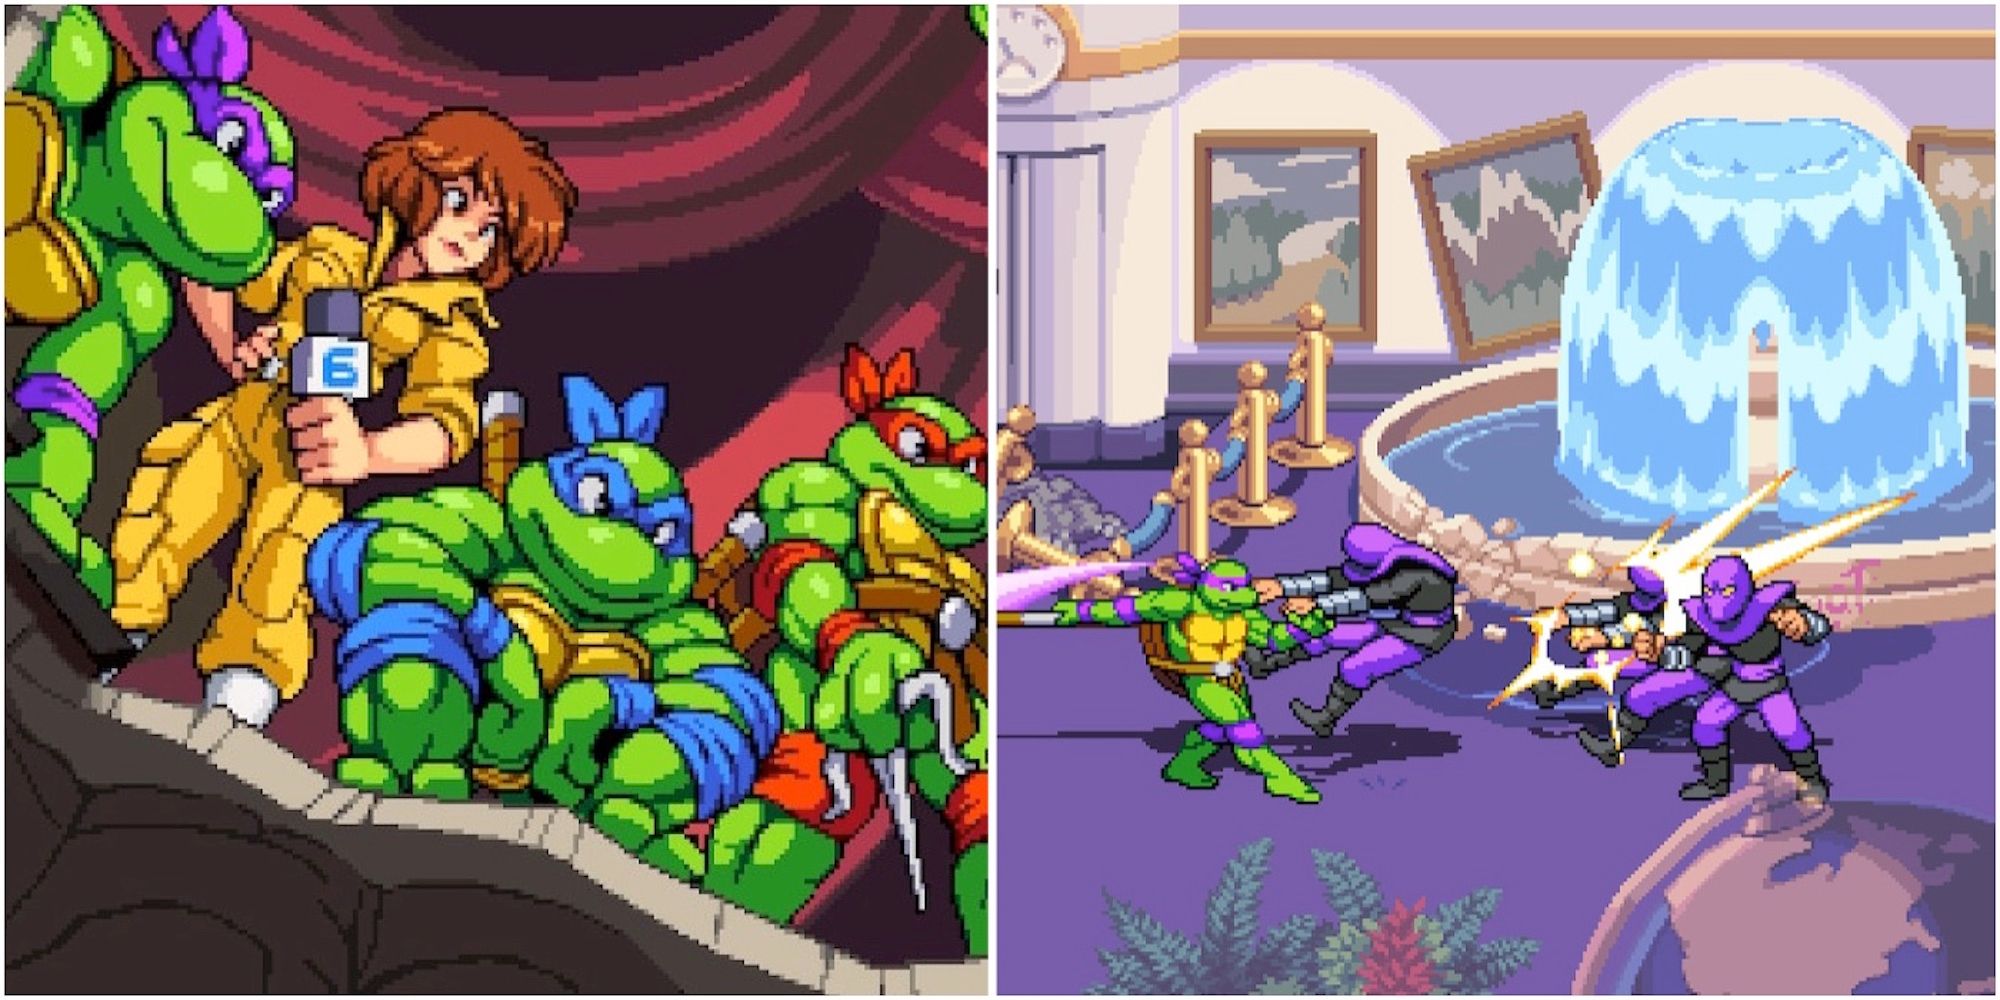 A cutscene featuring characters and fighting enemies in Teenage Mutant Ninja Turtles Shredder's Revenge